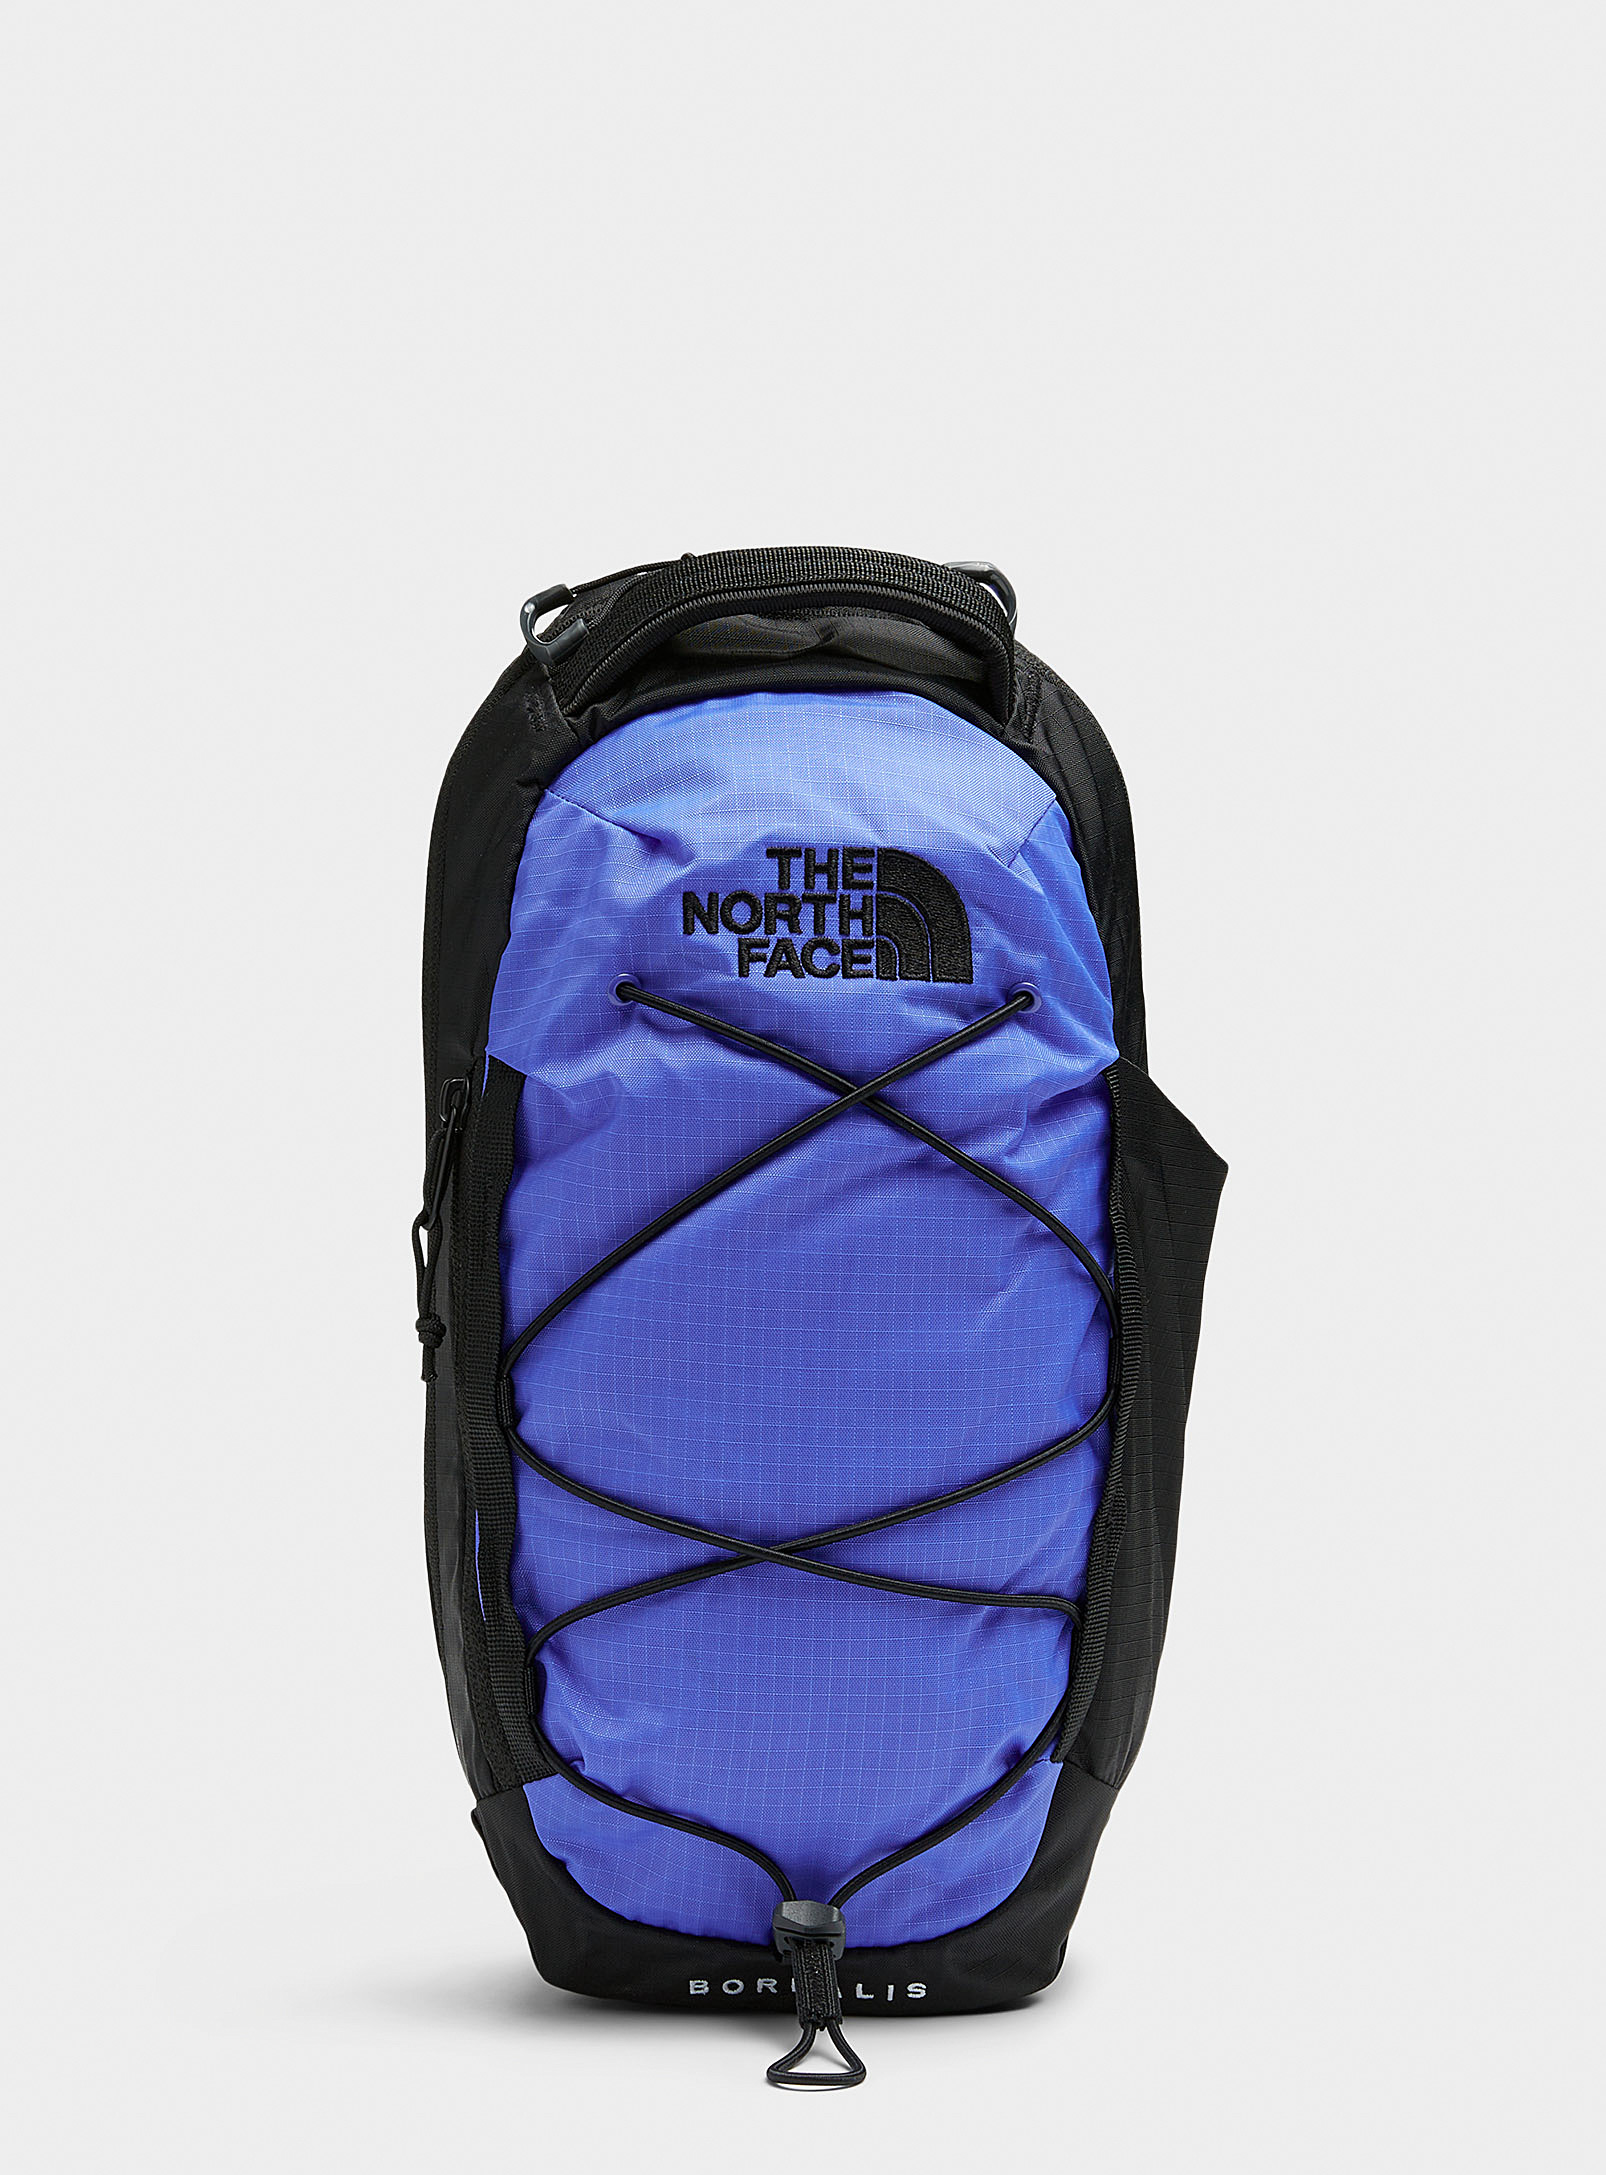 The North Face - Men's Borealis shoulder bag